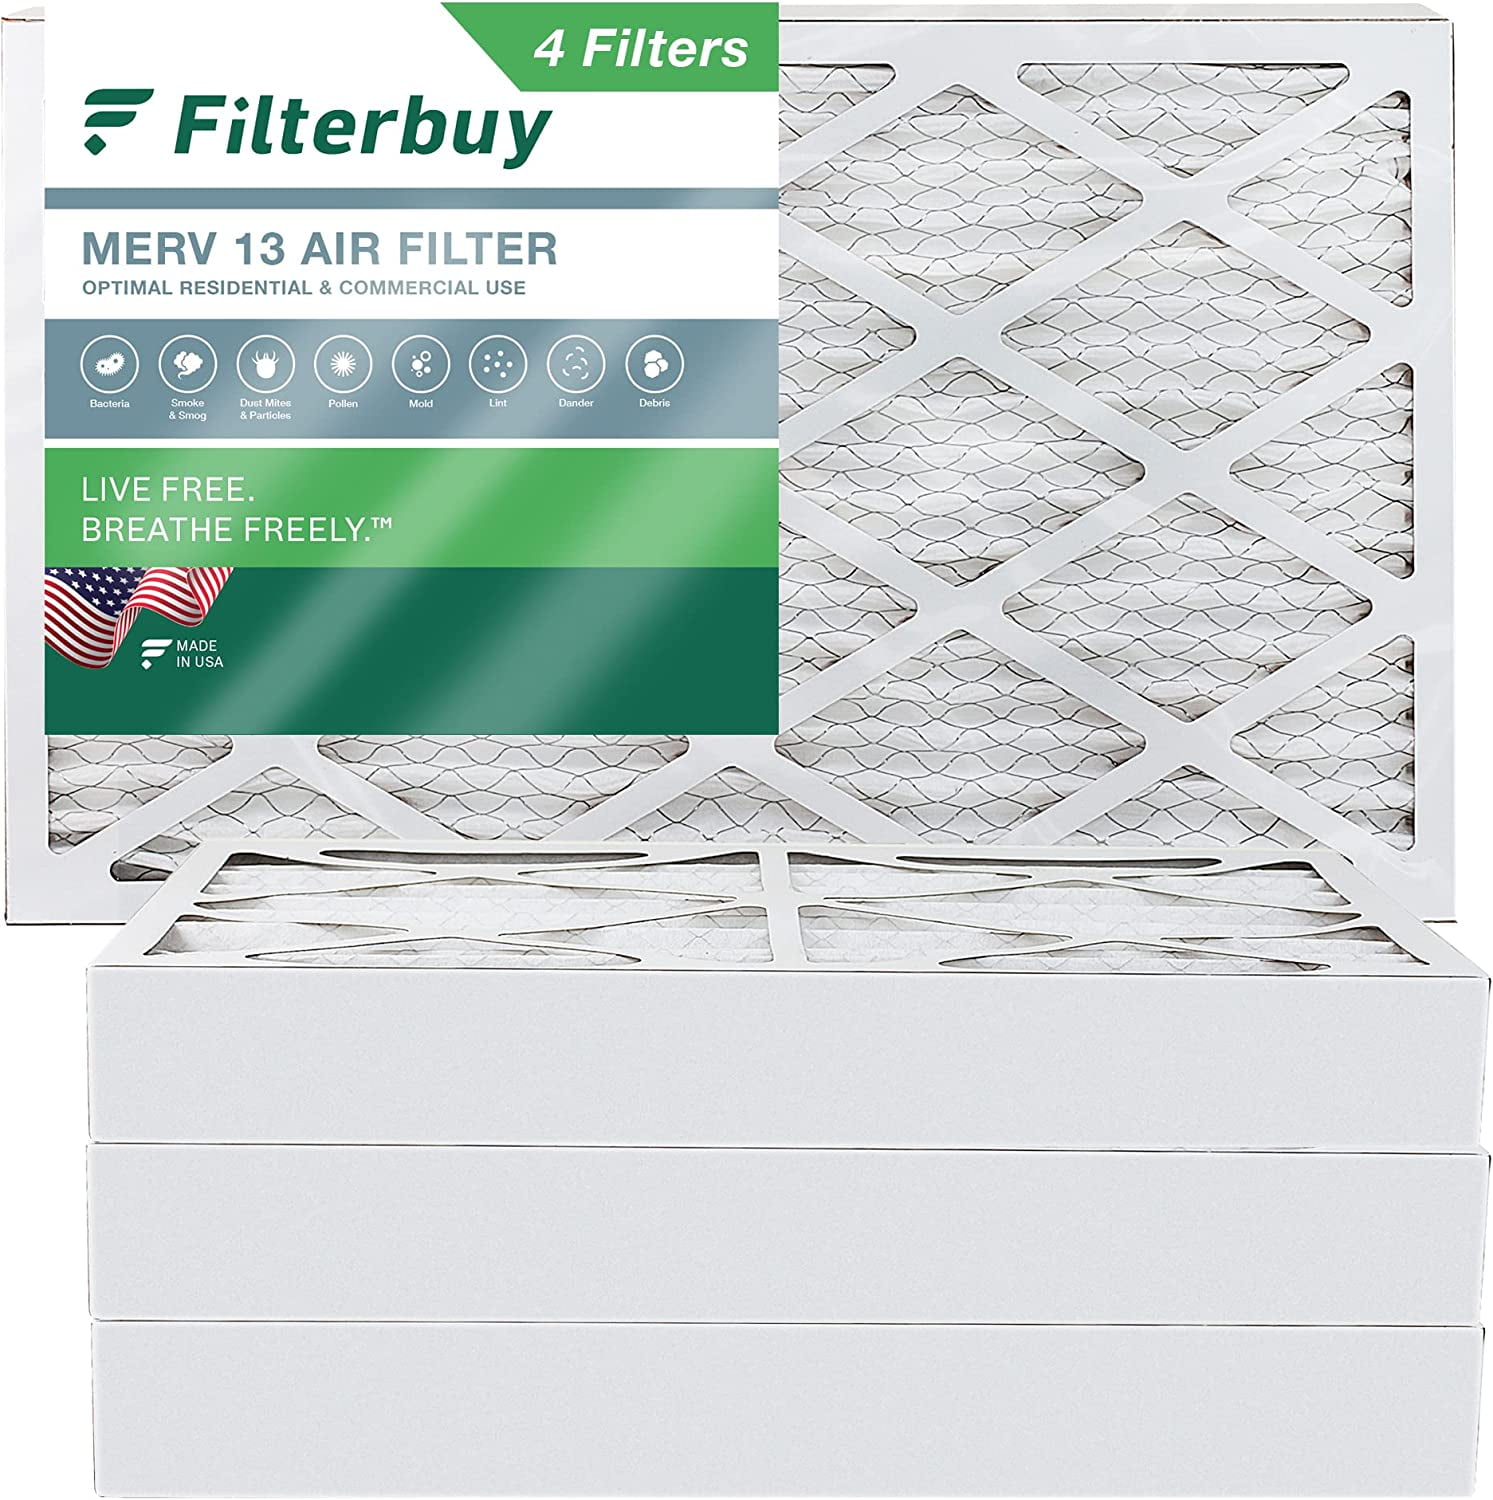 AFB Platinum plissée CVC AC four Filtre à air Merv 13 Filterbuy 20x24x4 